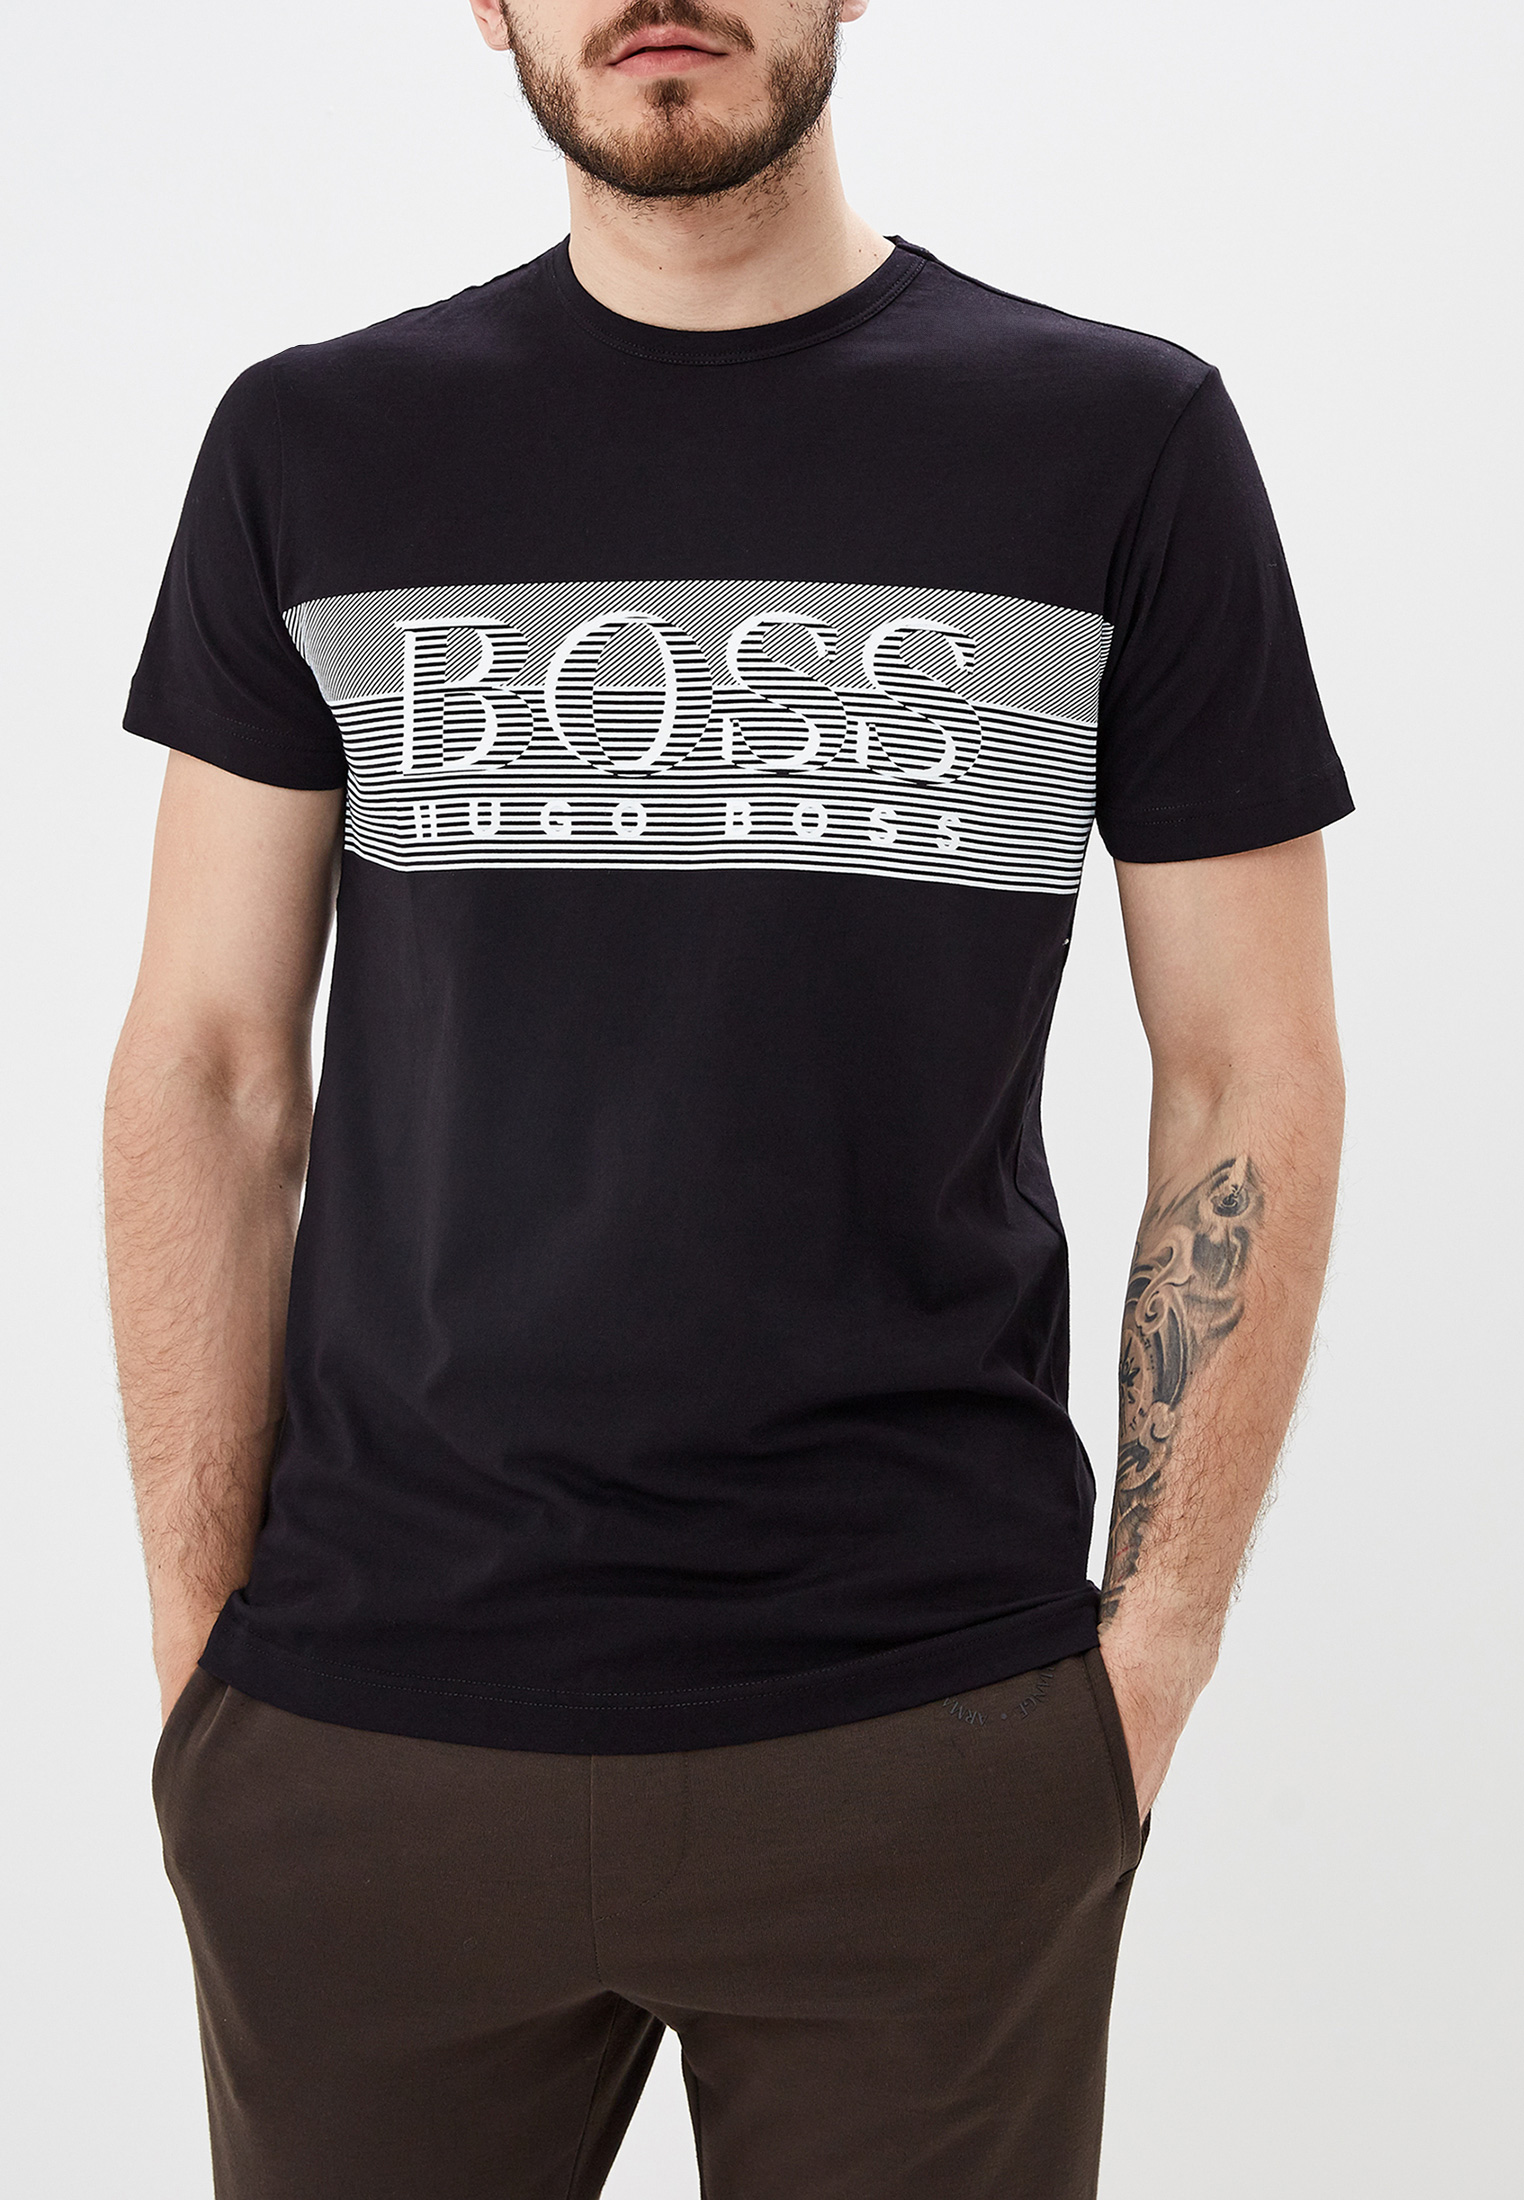 Футболки хуго босс. Футболка Hugo Hugo Boss черная. Майка Хуго босс черная. Футболка Boss Hugo Boss. Футболка Hugo Boss мужская черная.